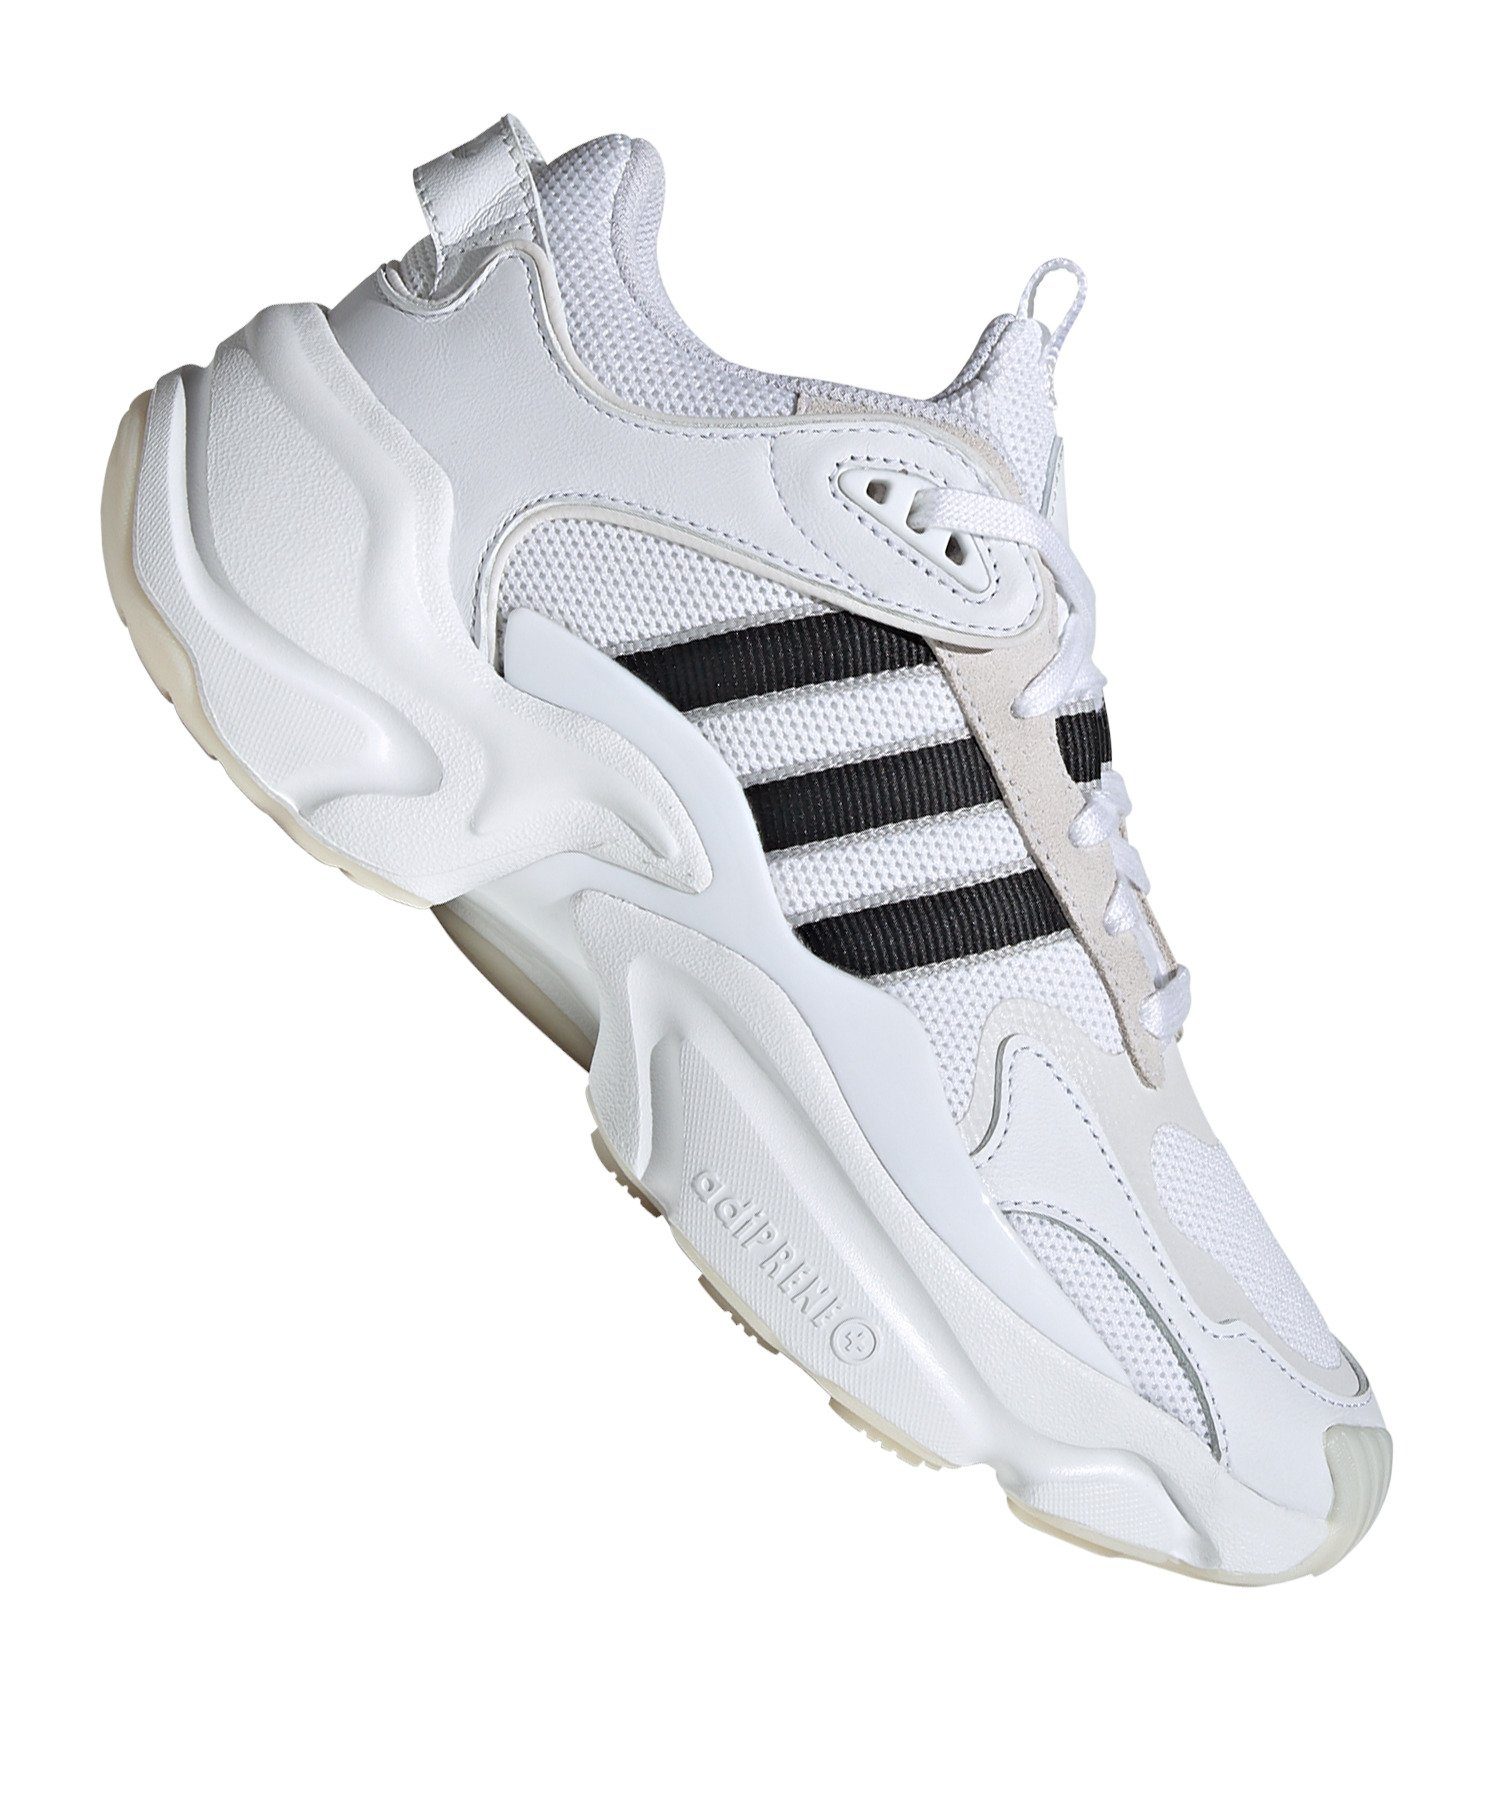 adidas Originals »Magmur Runner Sneaker Damen« Sneaker online kaufen | OTTO